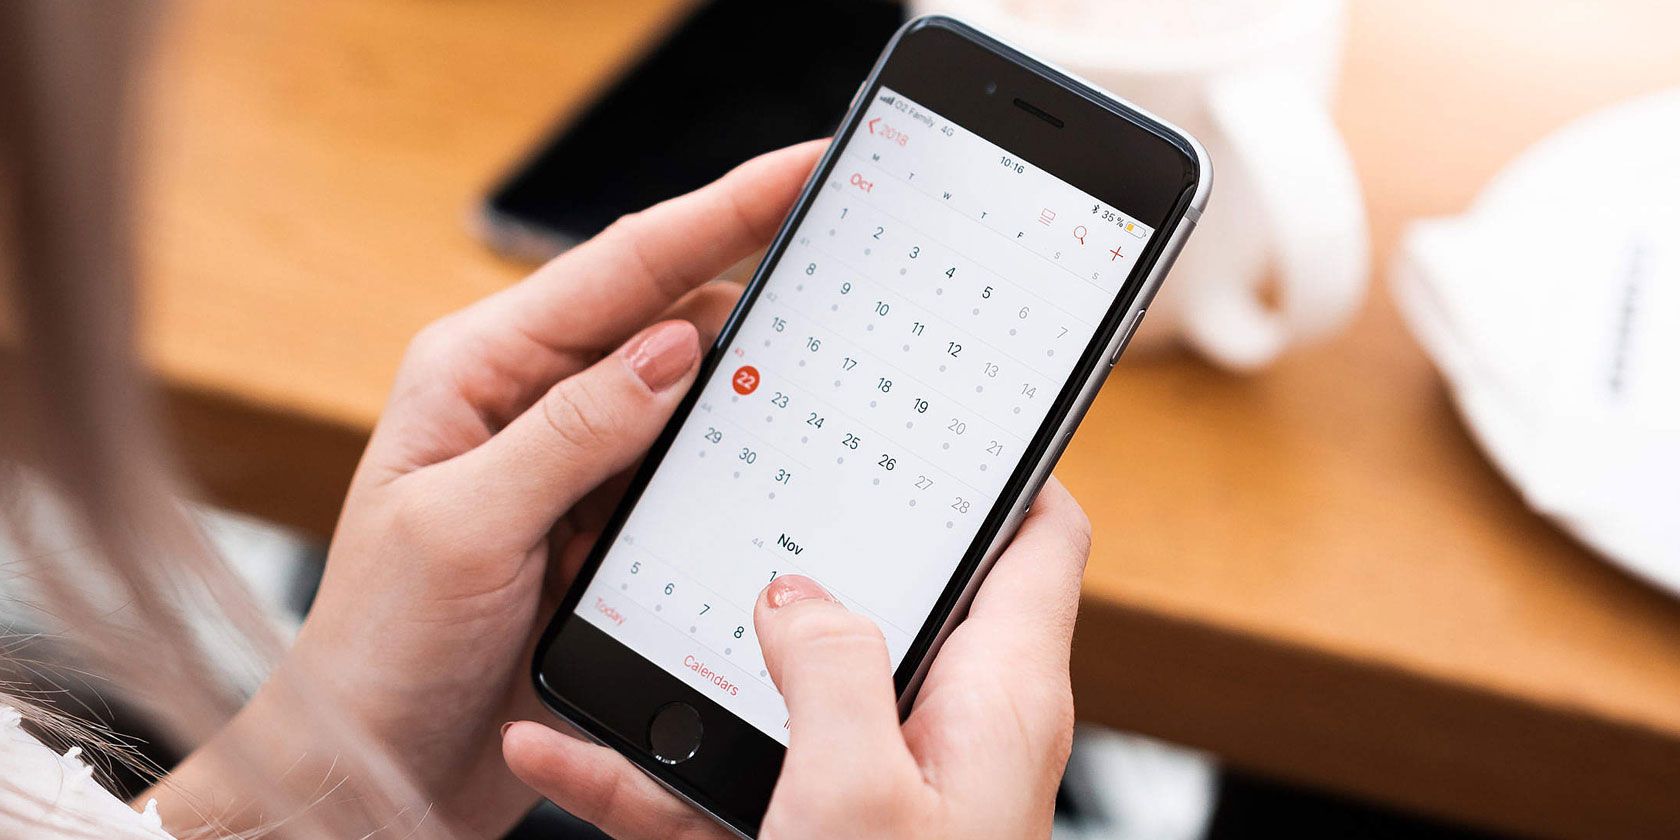 ipad calendar app you can write on